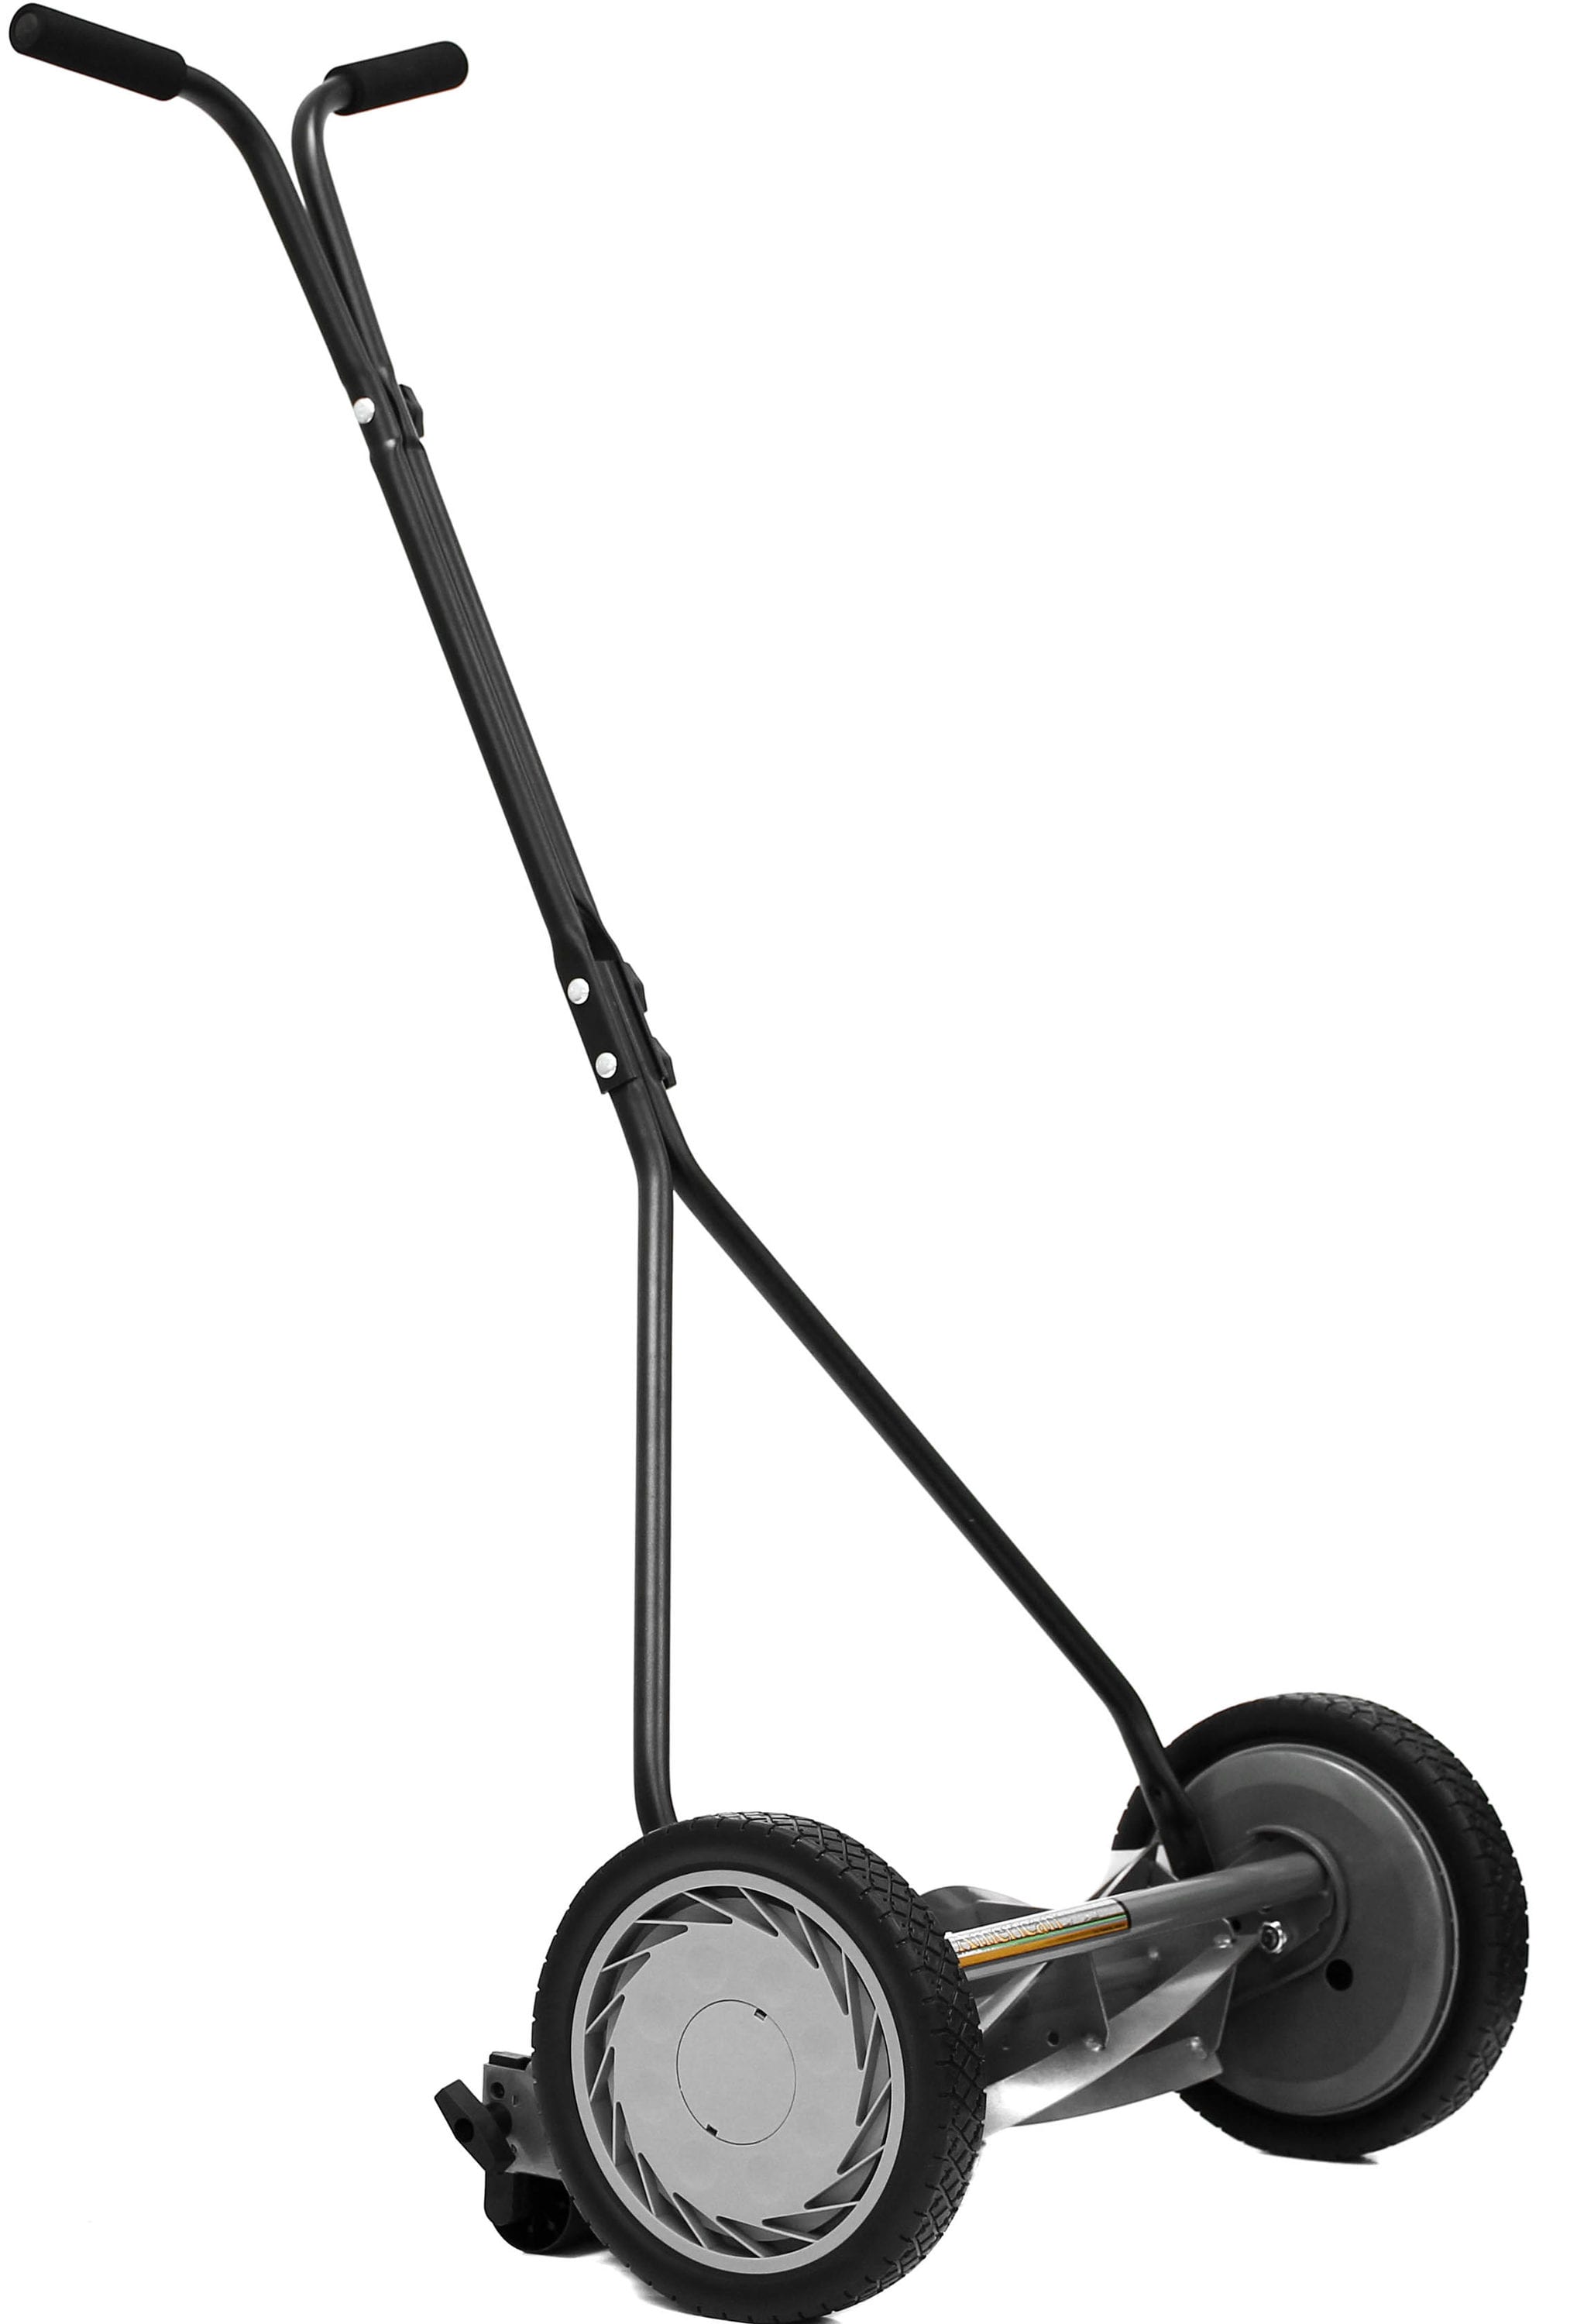 5-Blade Wheeled Lawn Mower Manual Reel Push Grass Cutting Machine